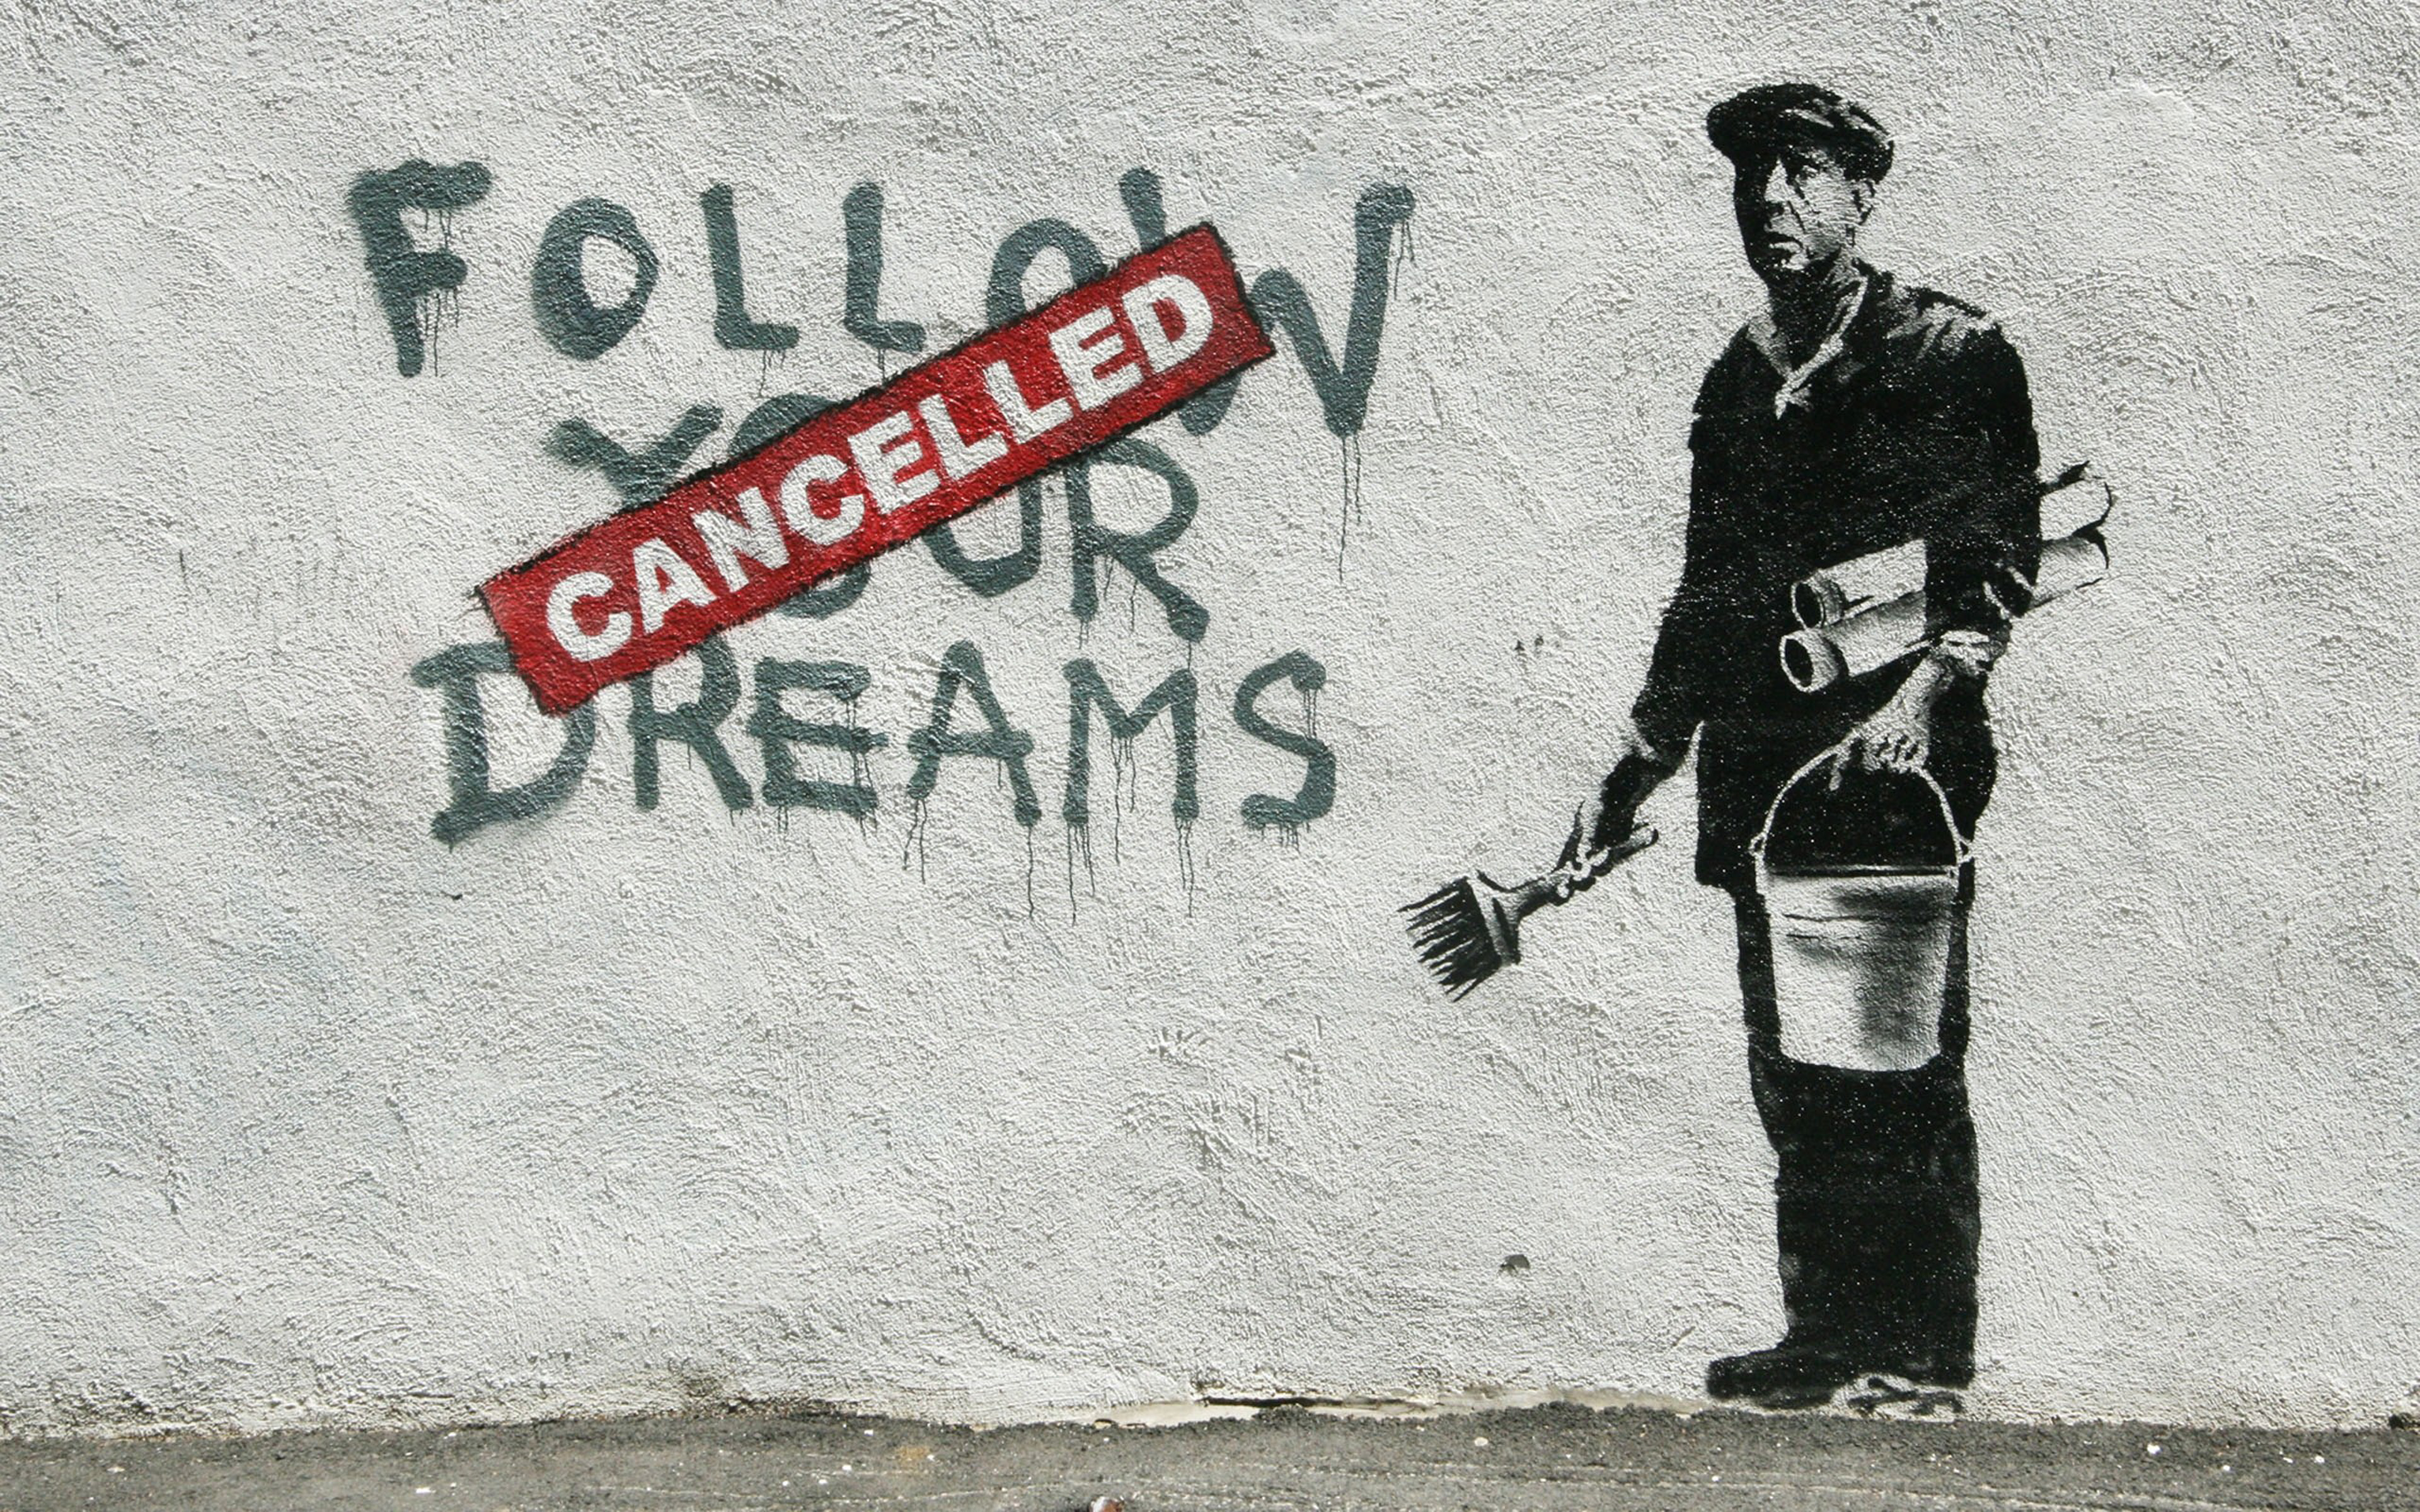 ... Banksy: Follow your dreams by lar888